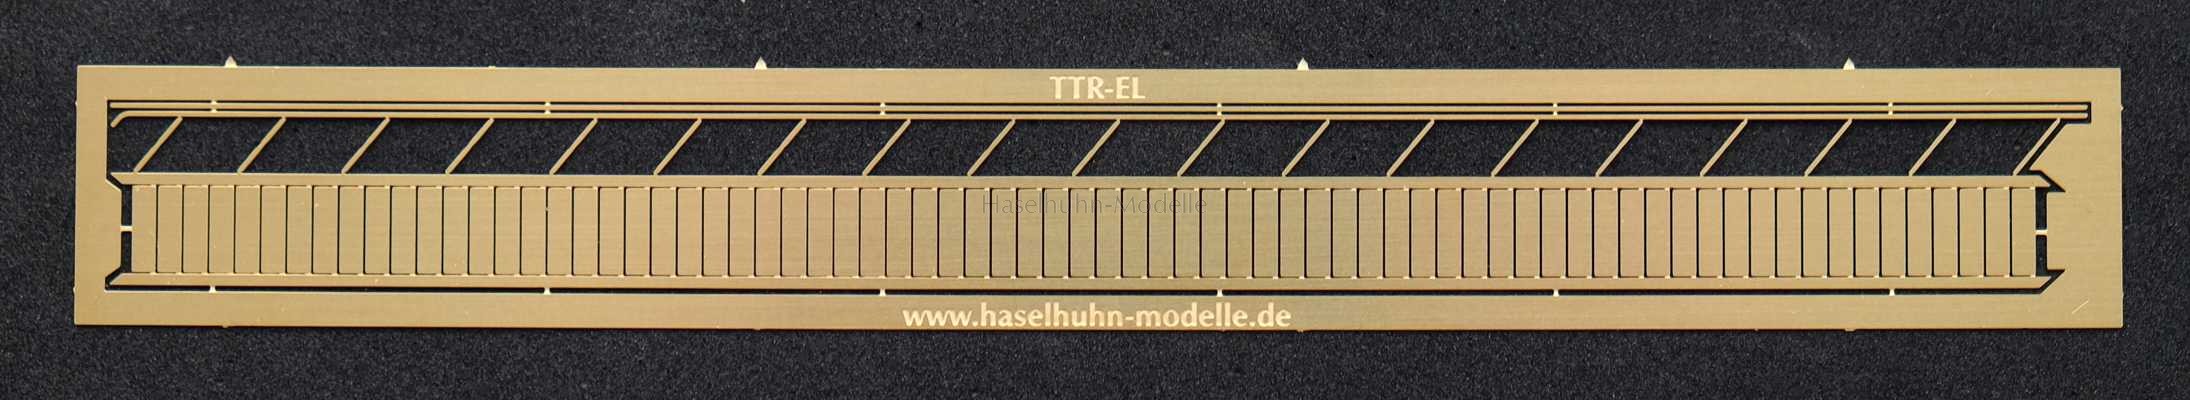 Treppenband TT 175 mm lang, frei teilbar, mit verstellbarem Handlauf